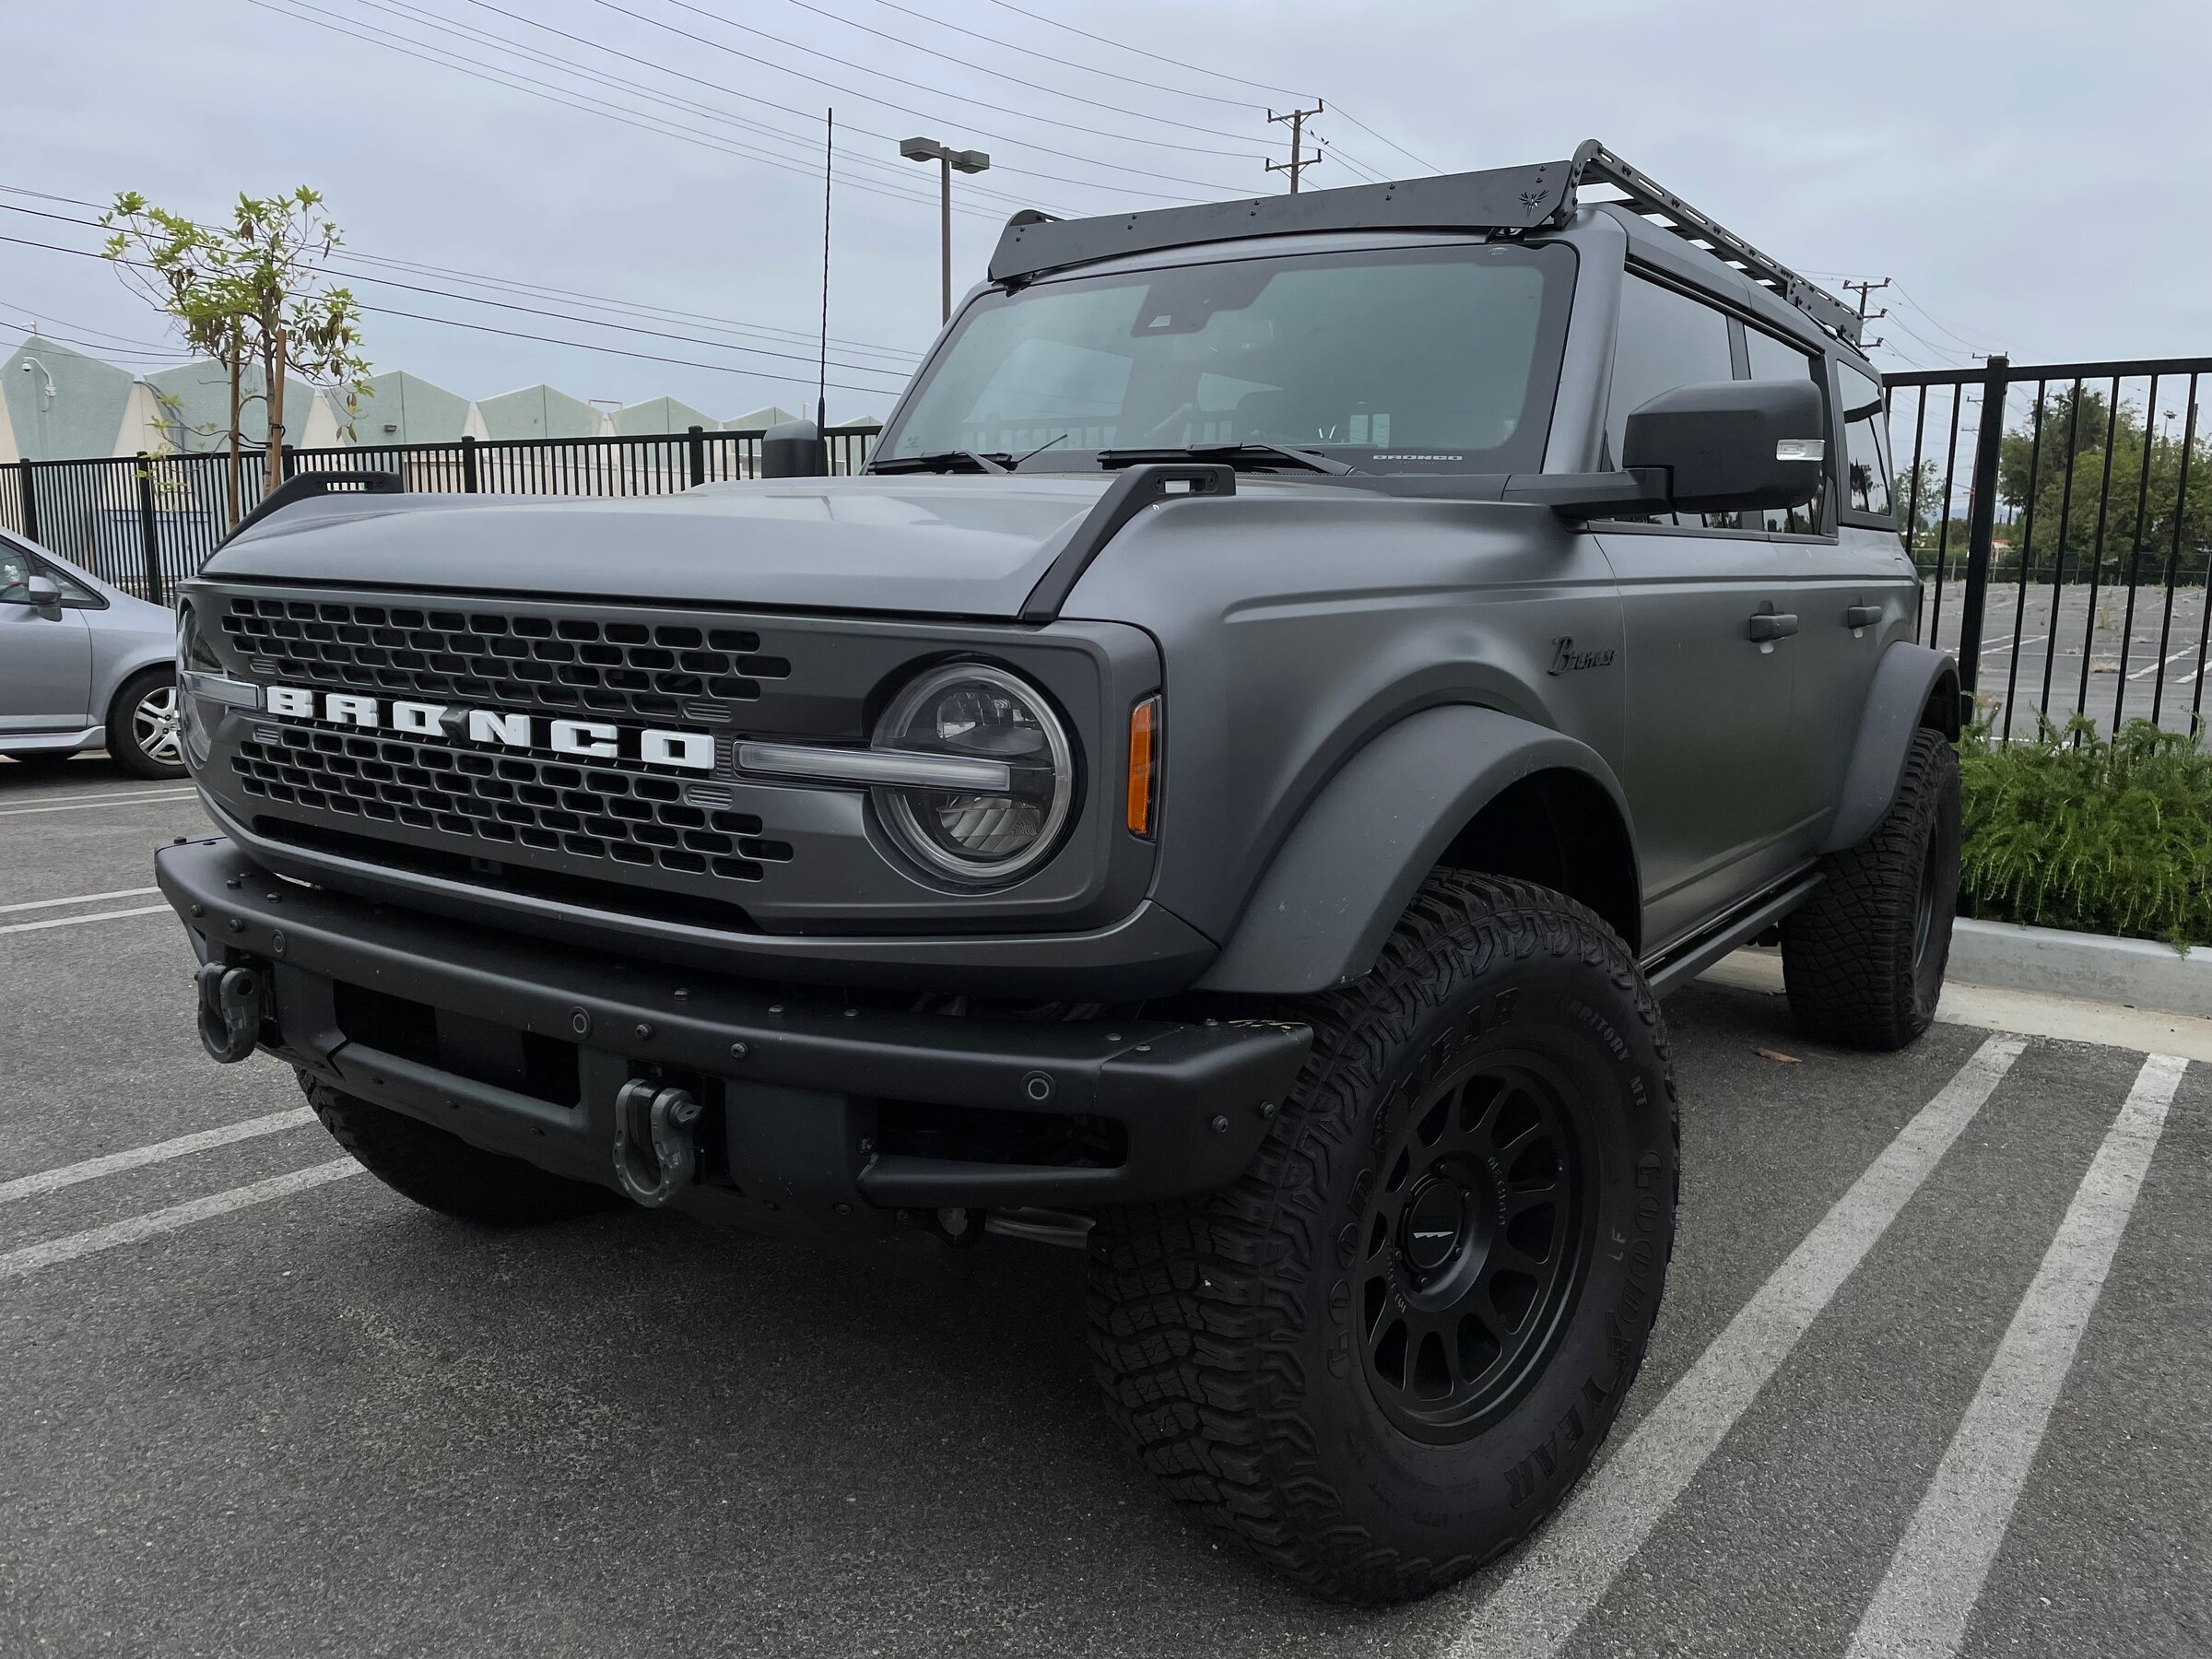 Ford Bronco Project “Terminator Bronco” overland build IMG_0256